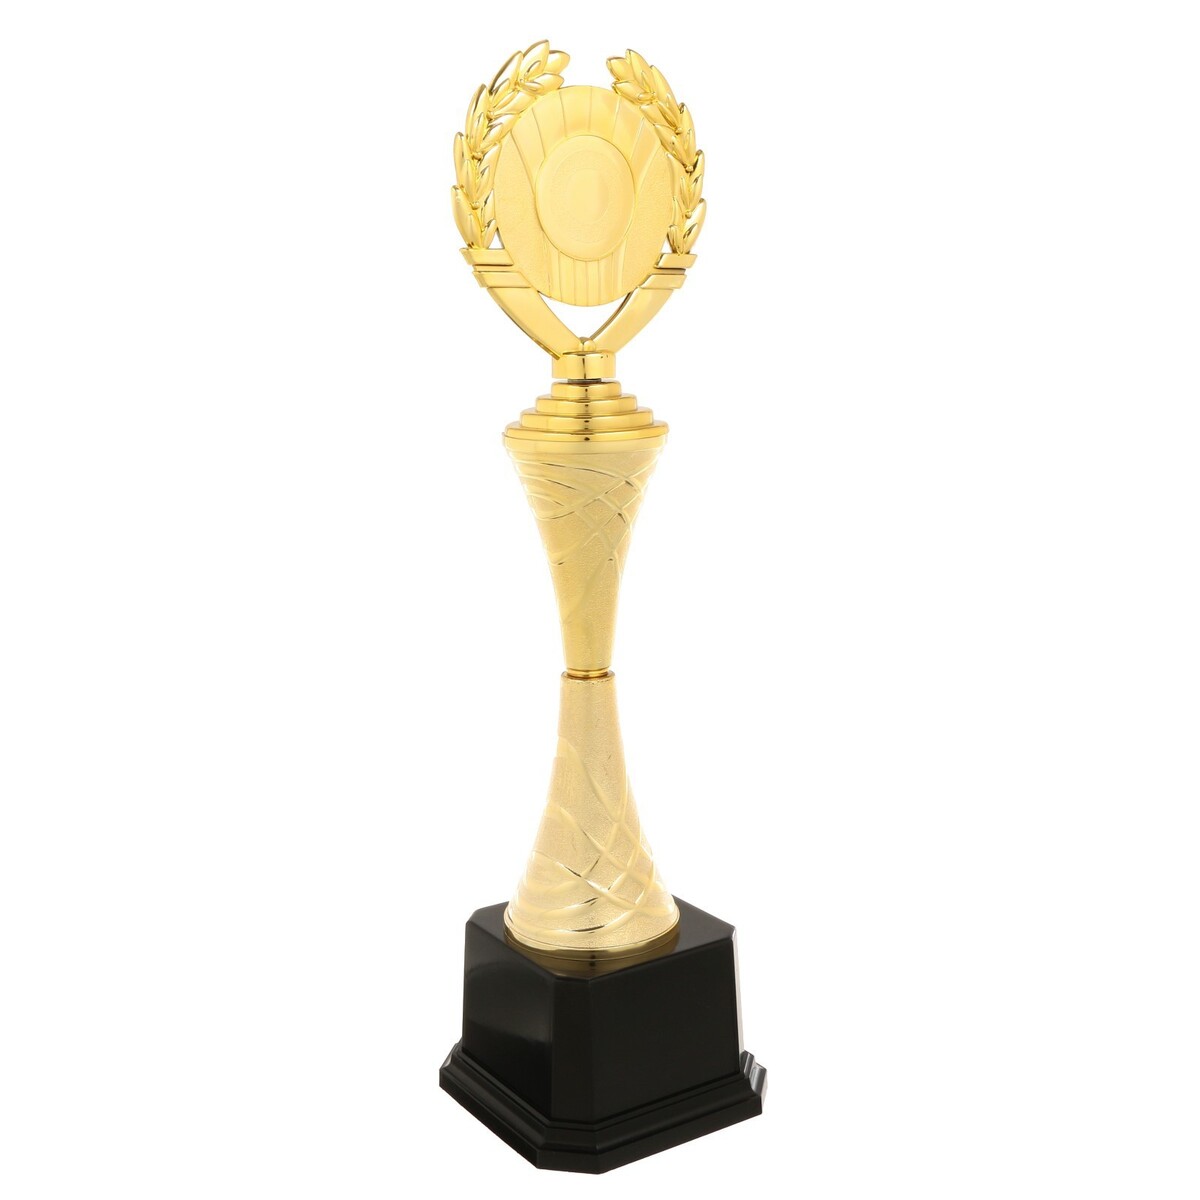 Кубок 178a, наградная фигура, золото, подставка пластик, 47 × 13 × 10 см. кубок